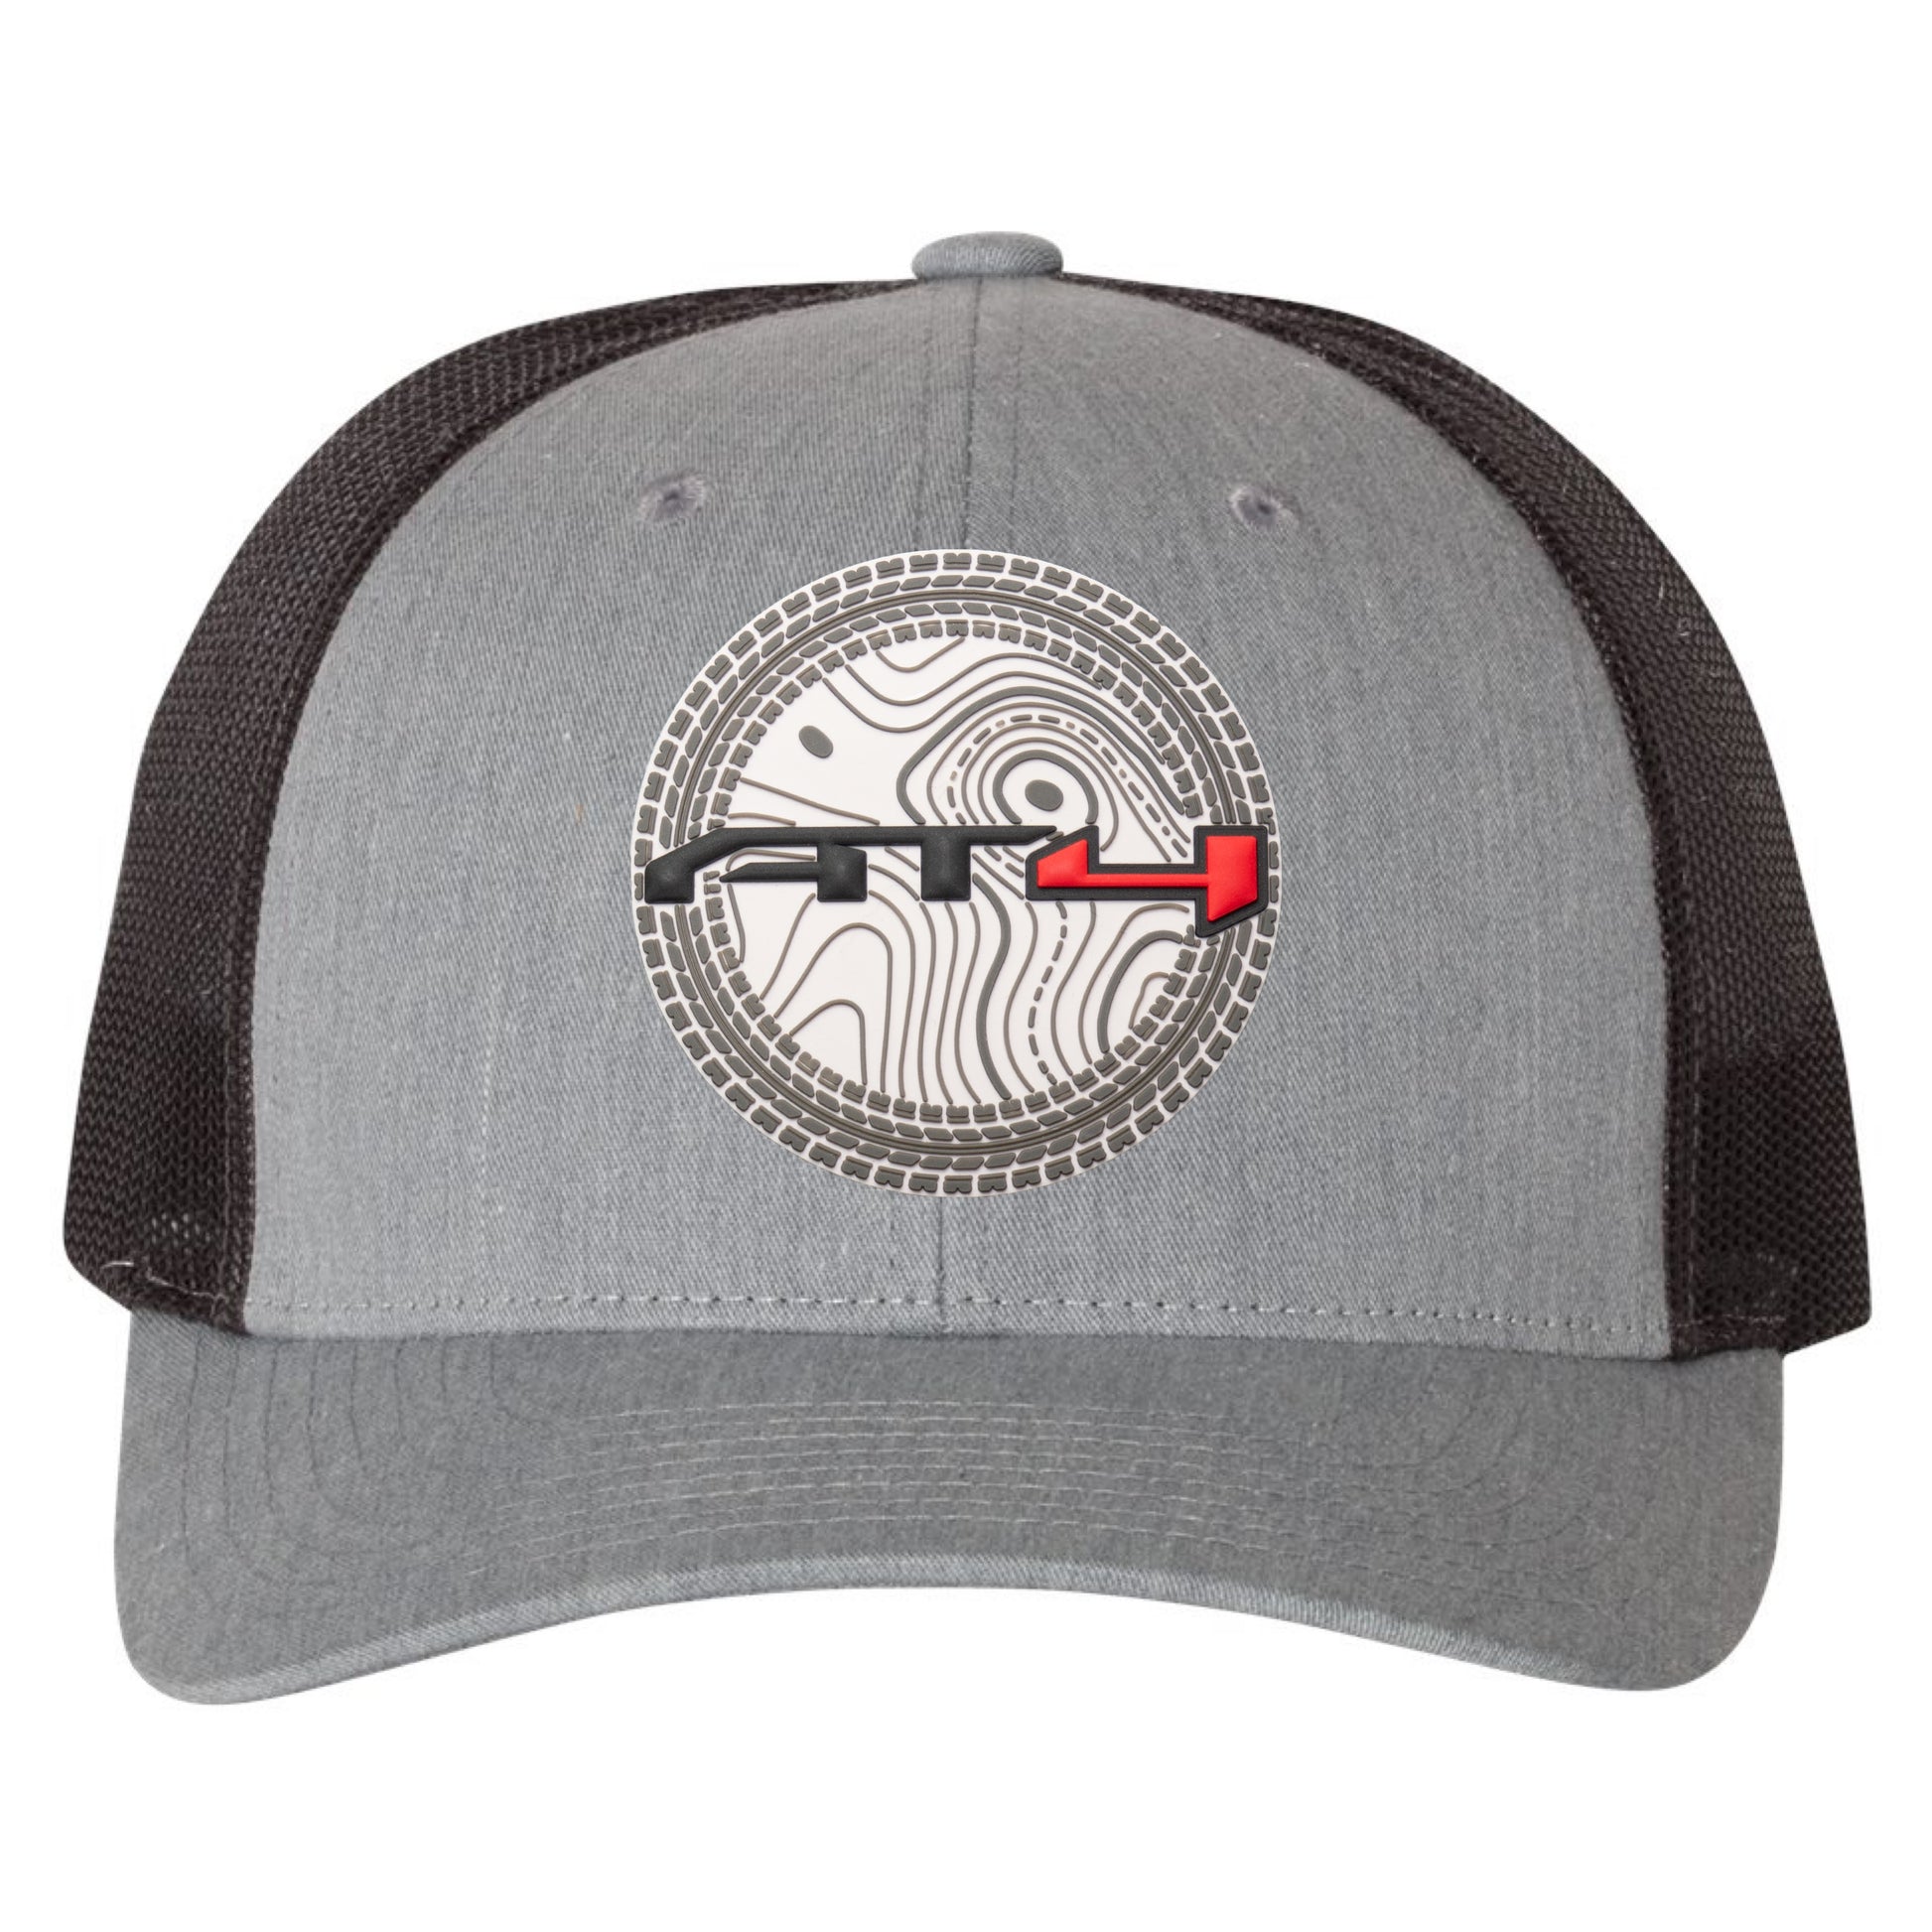 AT4 3D Snapback Trucker Hat- Heather Grey/ Dark Charcoal - Ten Gallon Hat Co.